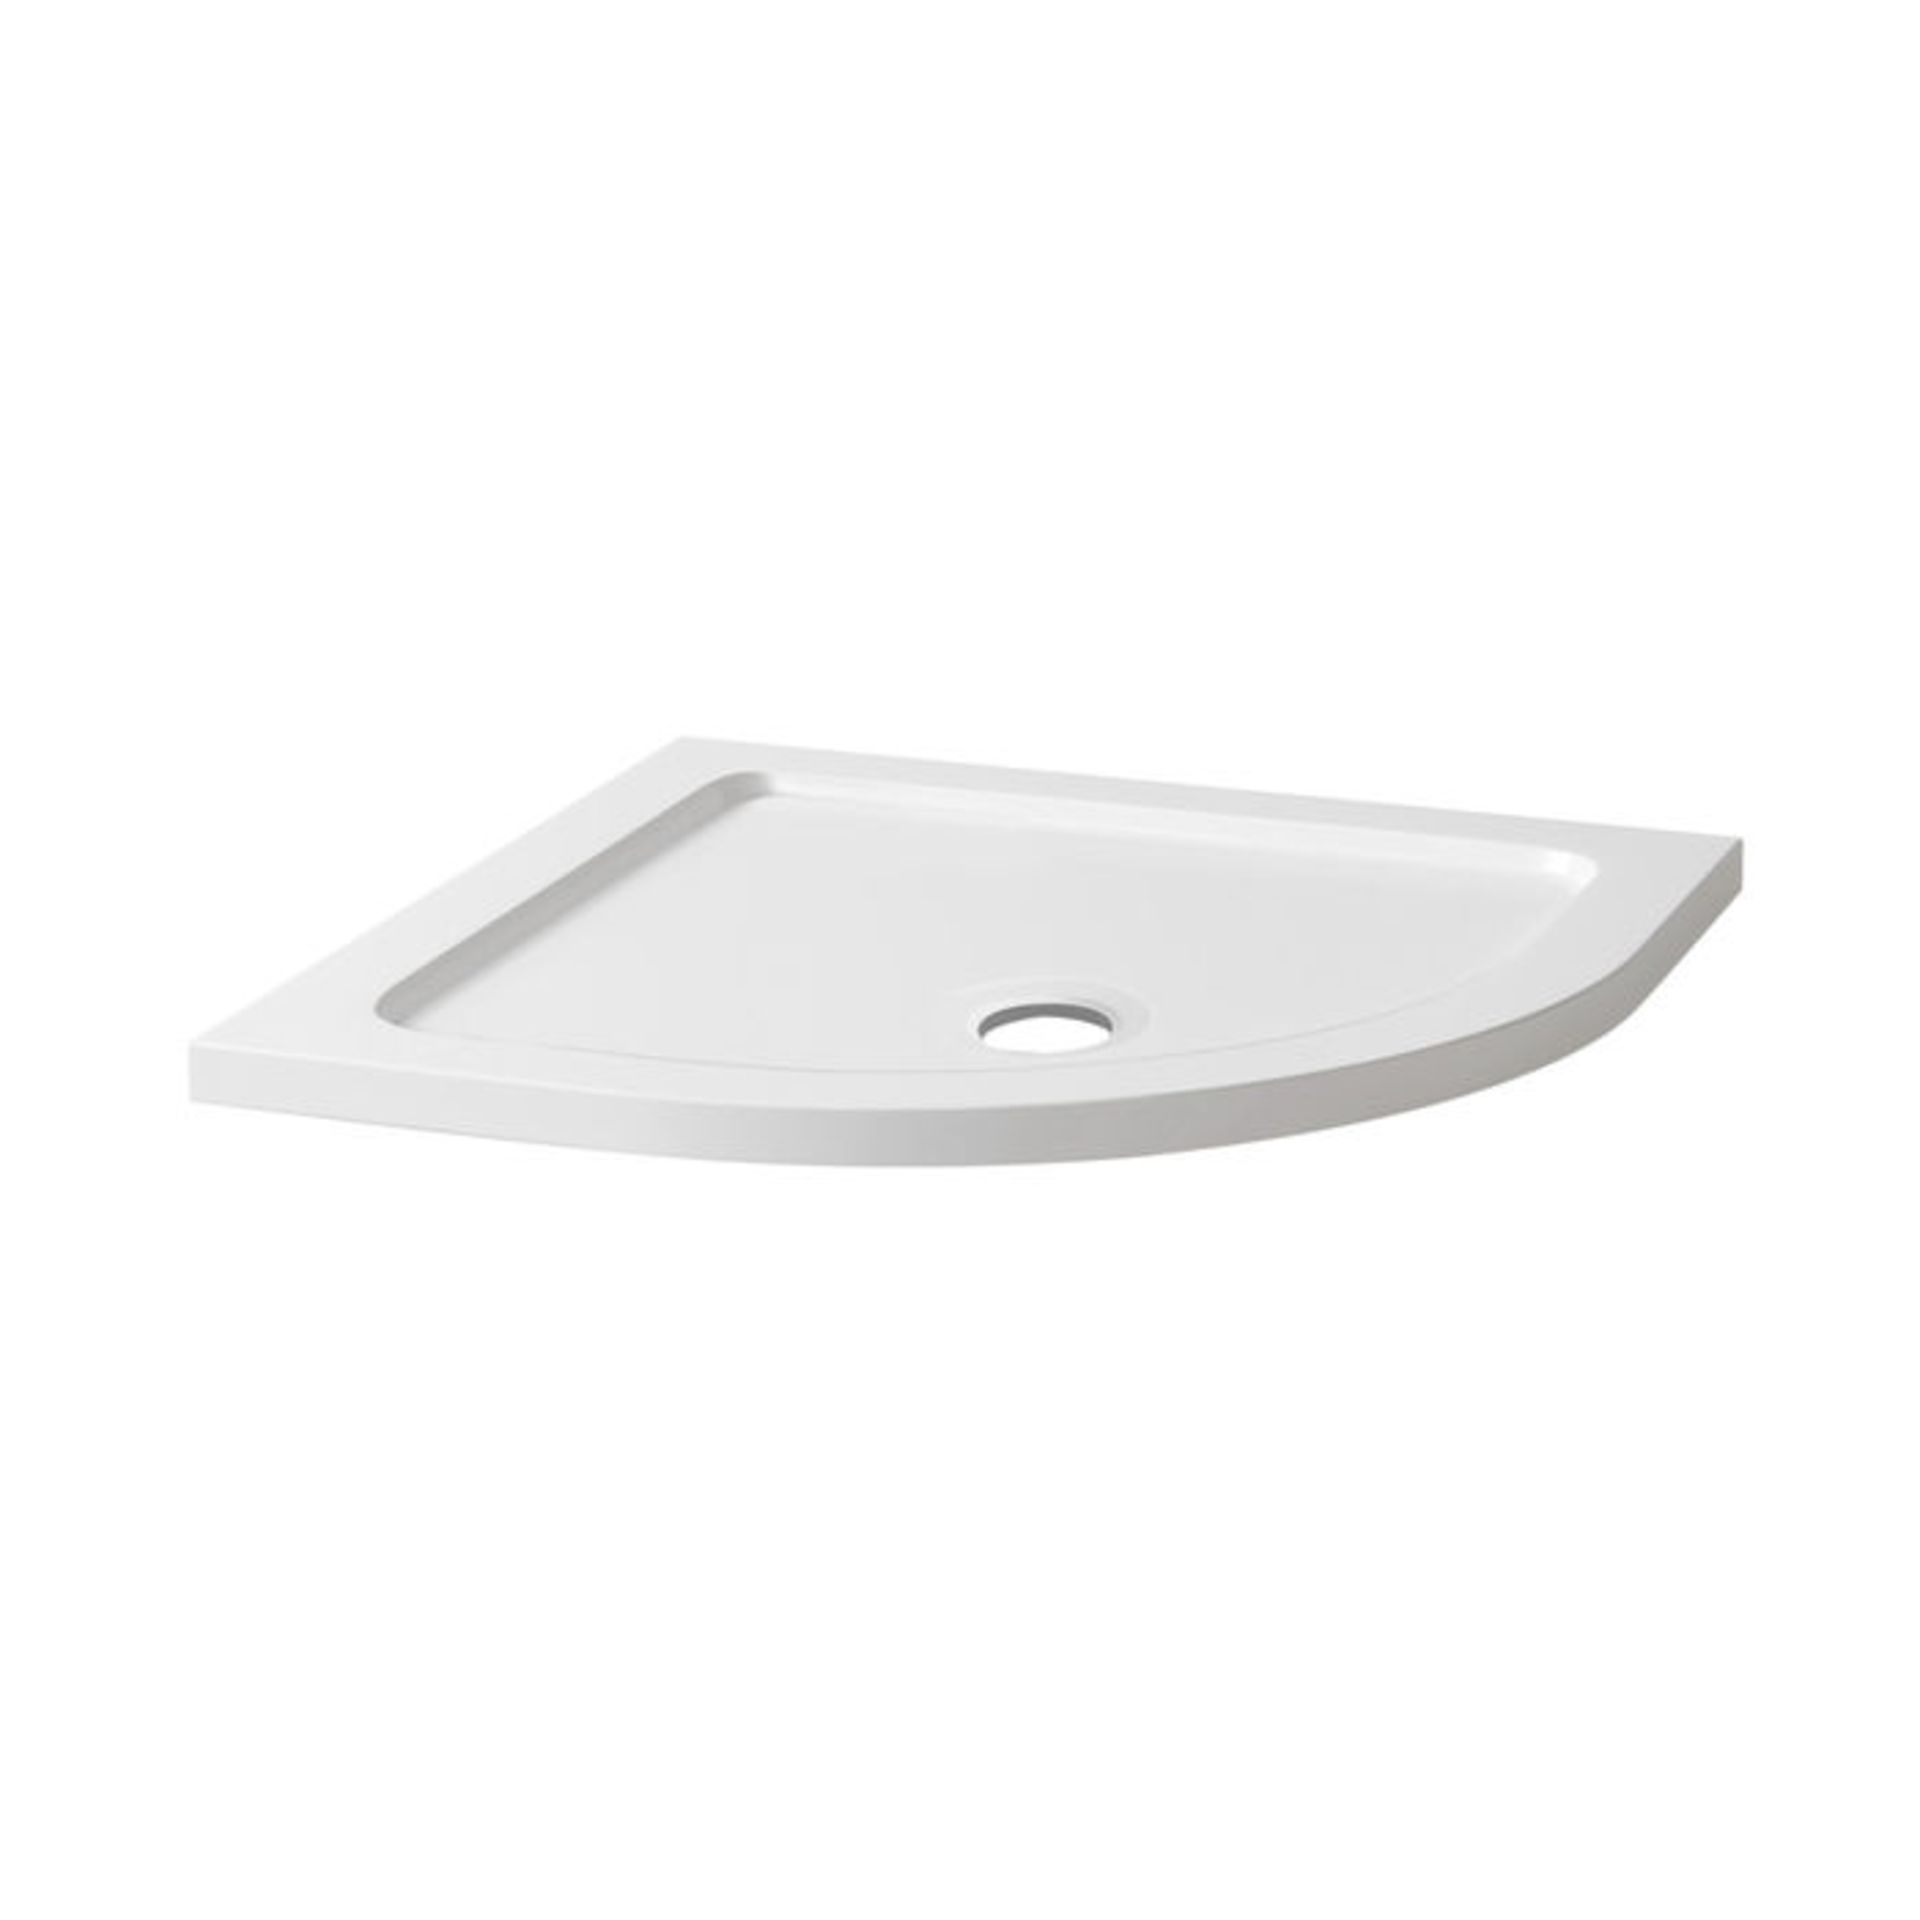 NEW (AA36) 900x900mm Quadrant Ultra Slim Stone Shower Tray. RRP £224.99.Low profile ultra slim... - Image 3 of 3